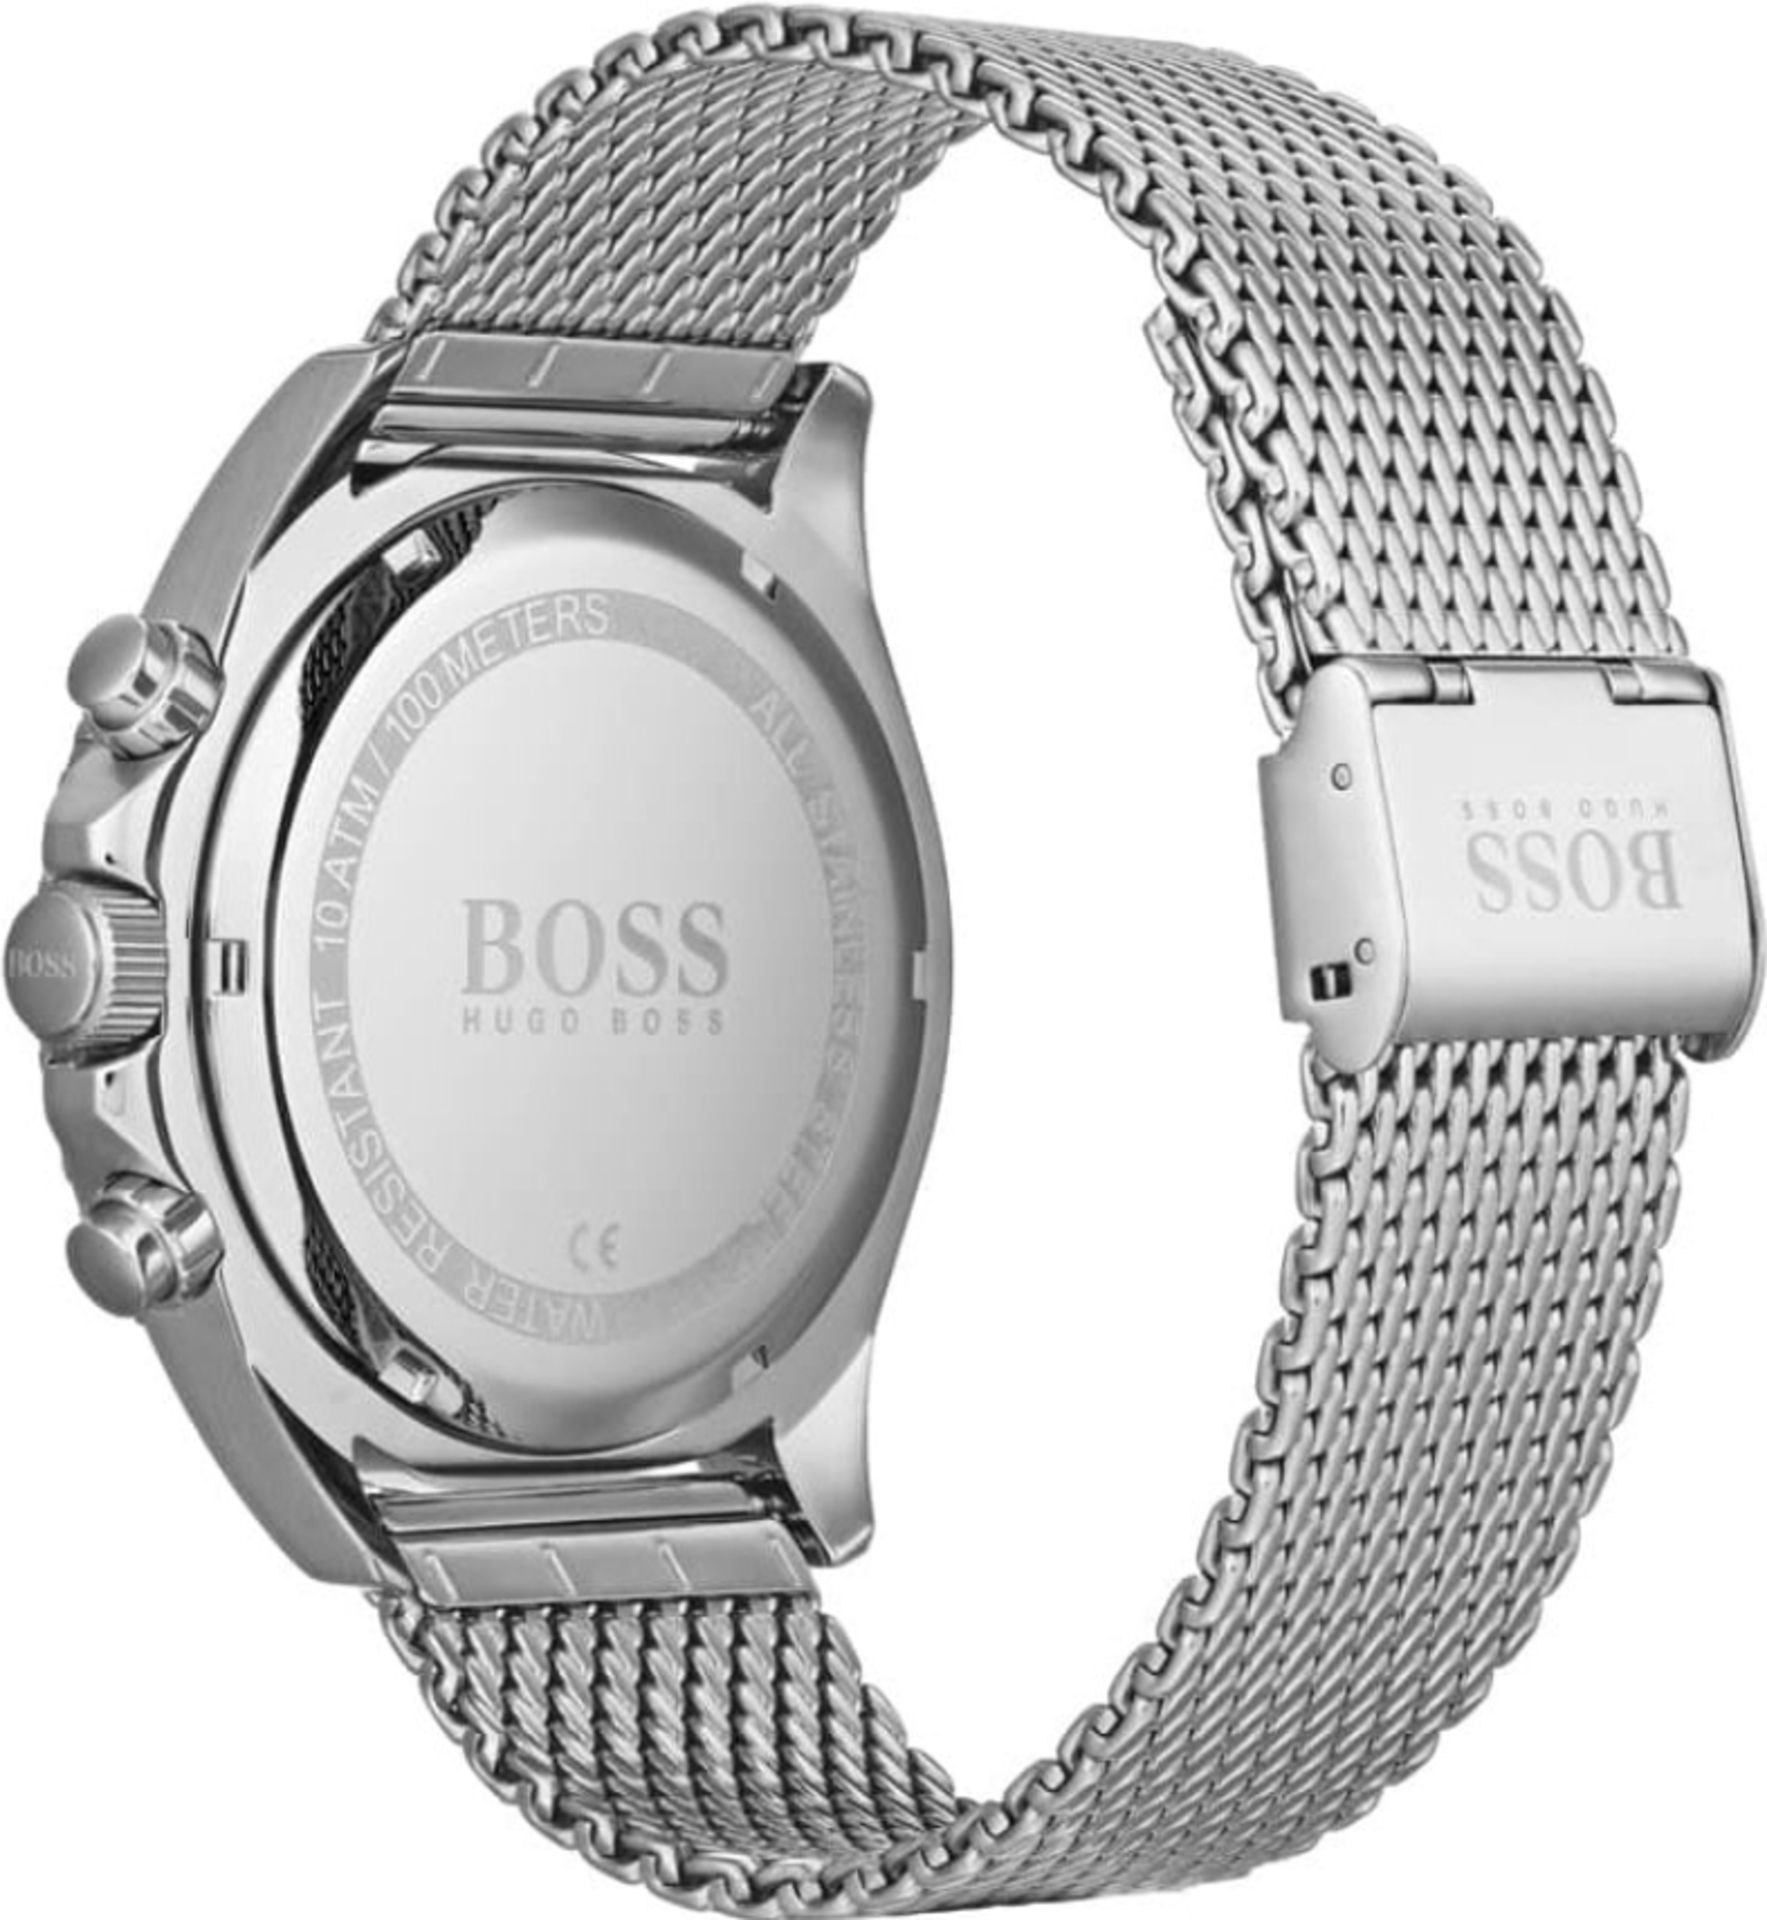 Hugo Boss 1513701 Men's Ocean Edition Silver Mesh Band Quartz Chronograph Watch - Image 4 of 6